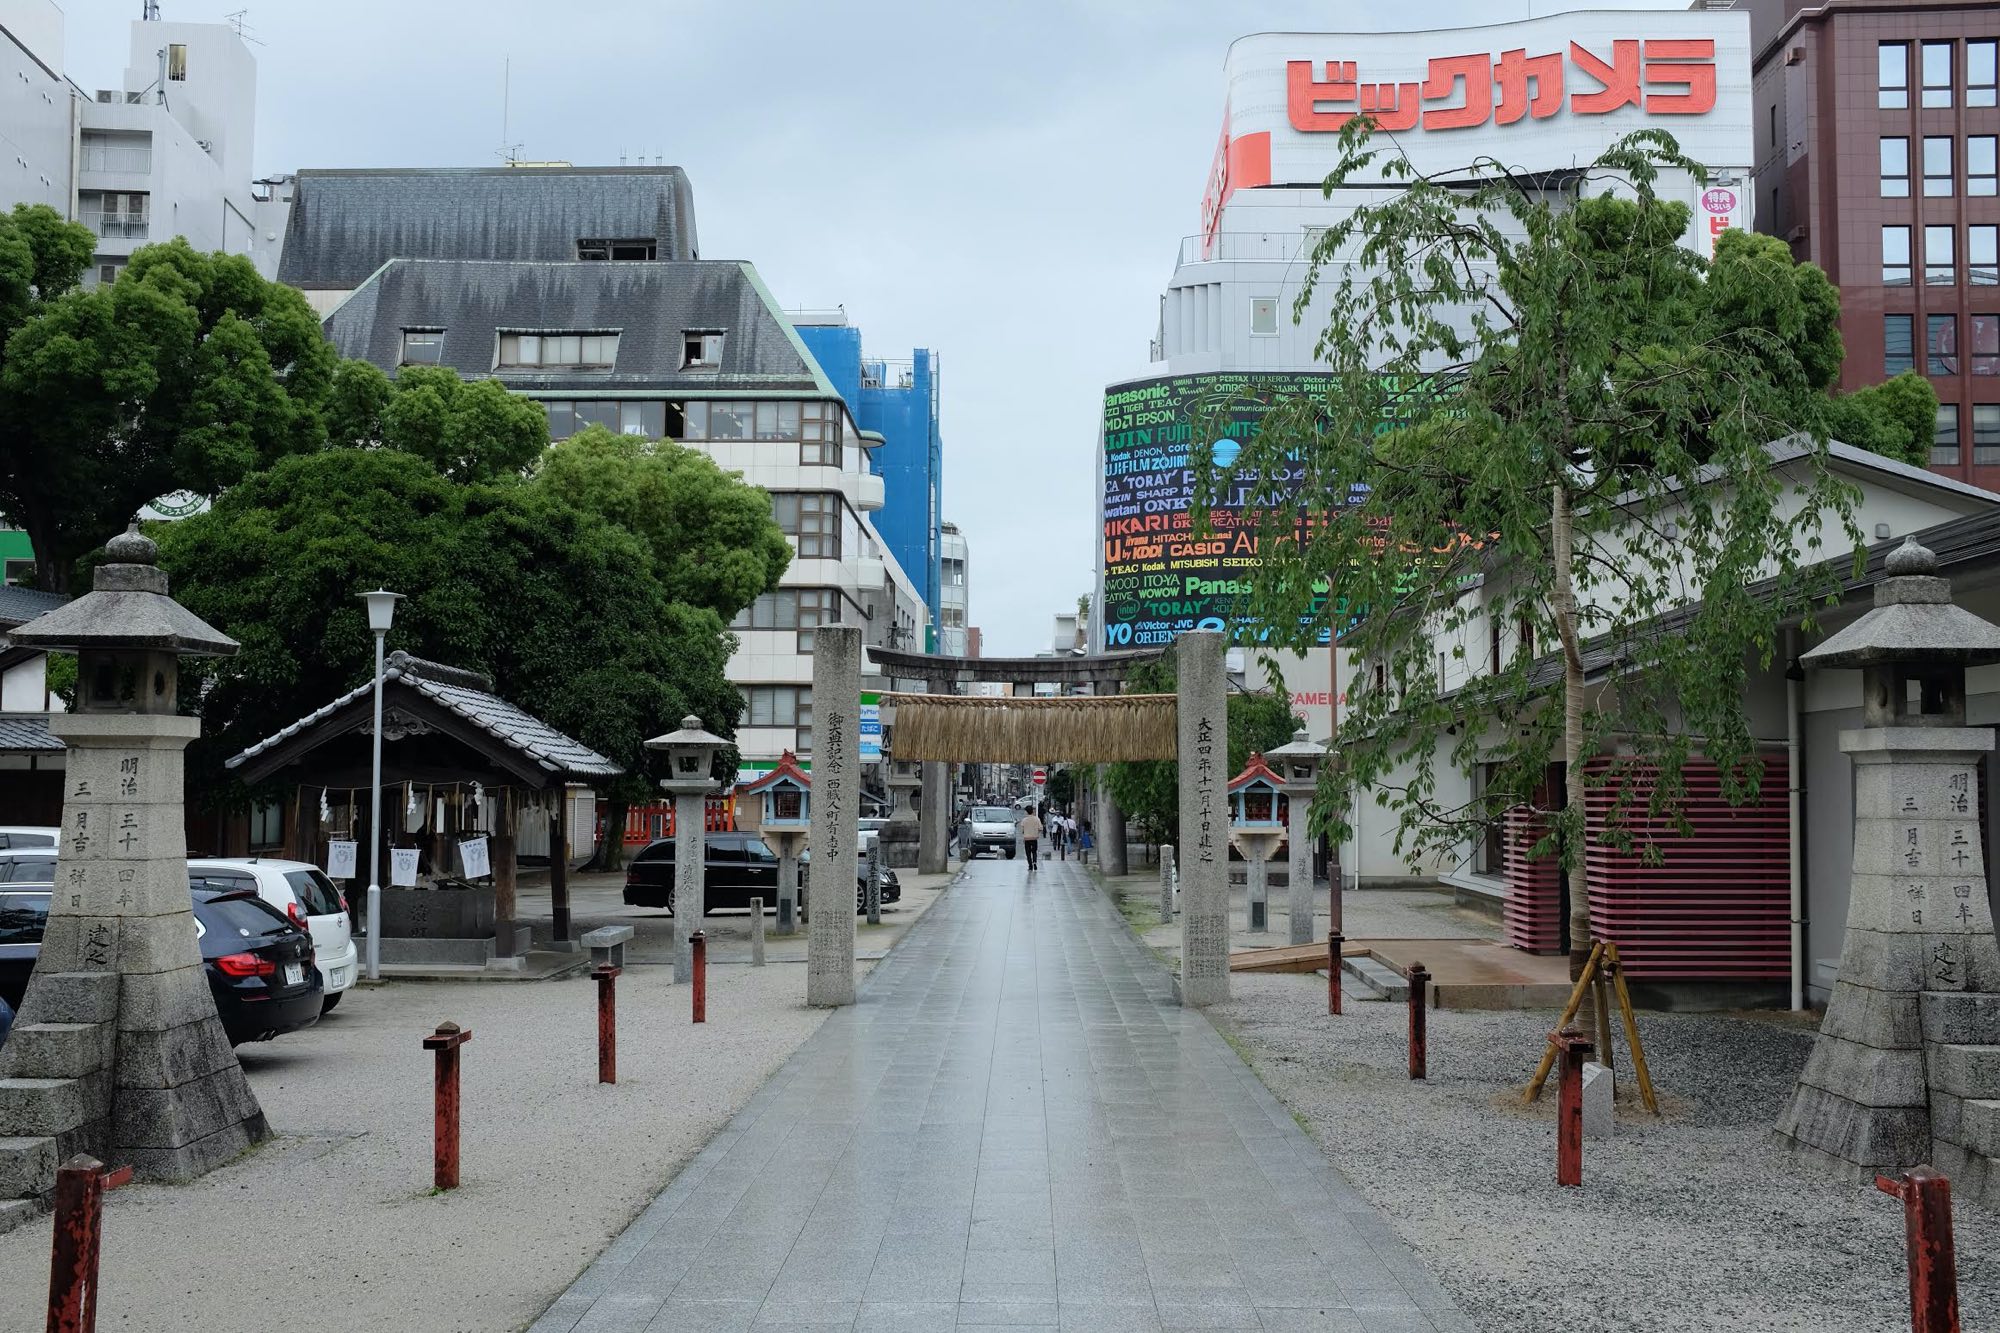 Temple between buildings in Fukuoka center, perfect refresh walk in a busy weekend getaway